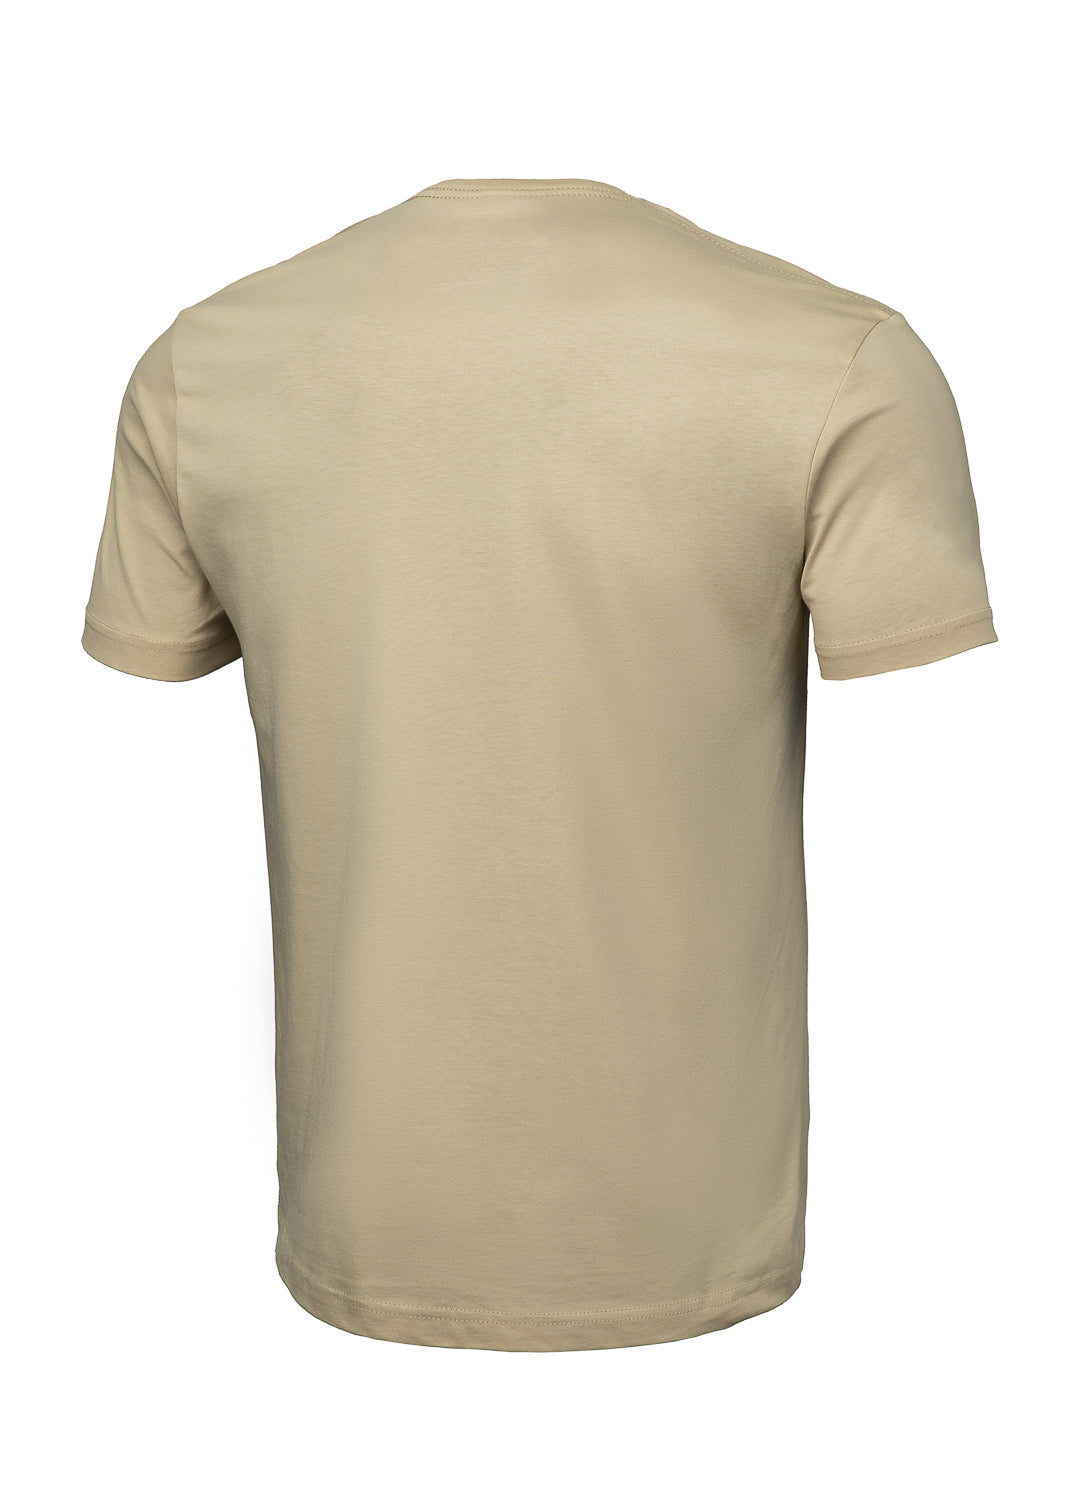 SMALL LOGO 21 Sand T-Shirt